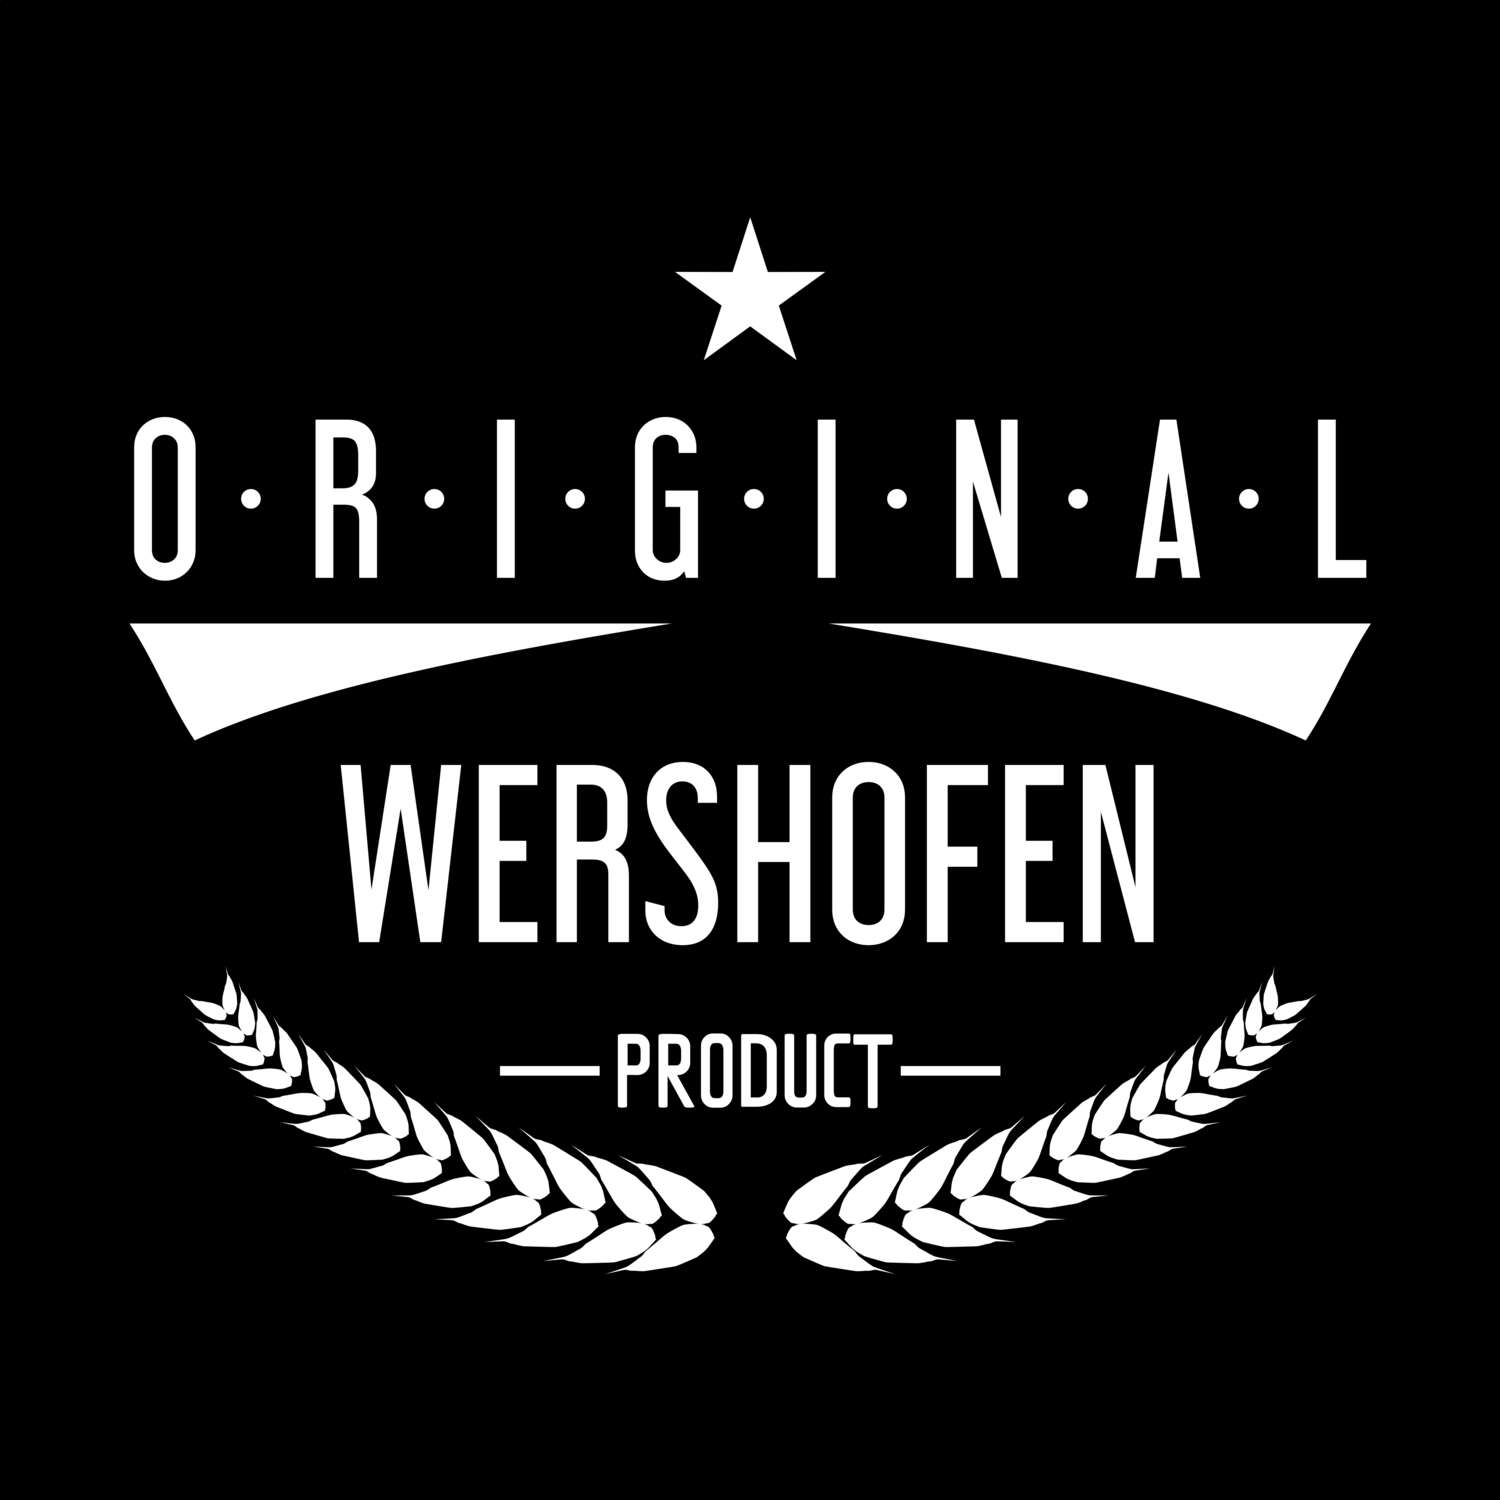 Wershofen T-Shirt »Original Product«